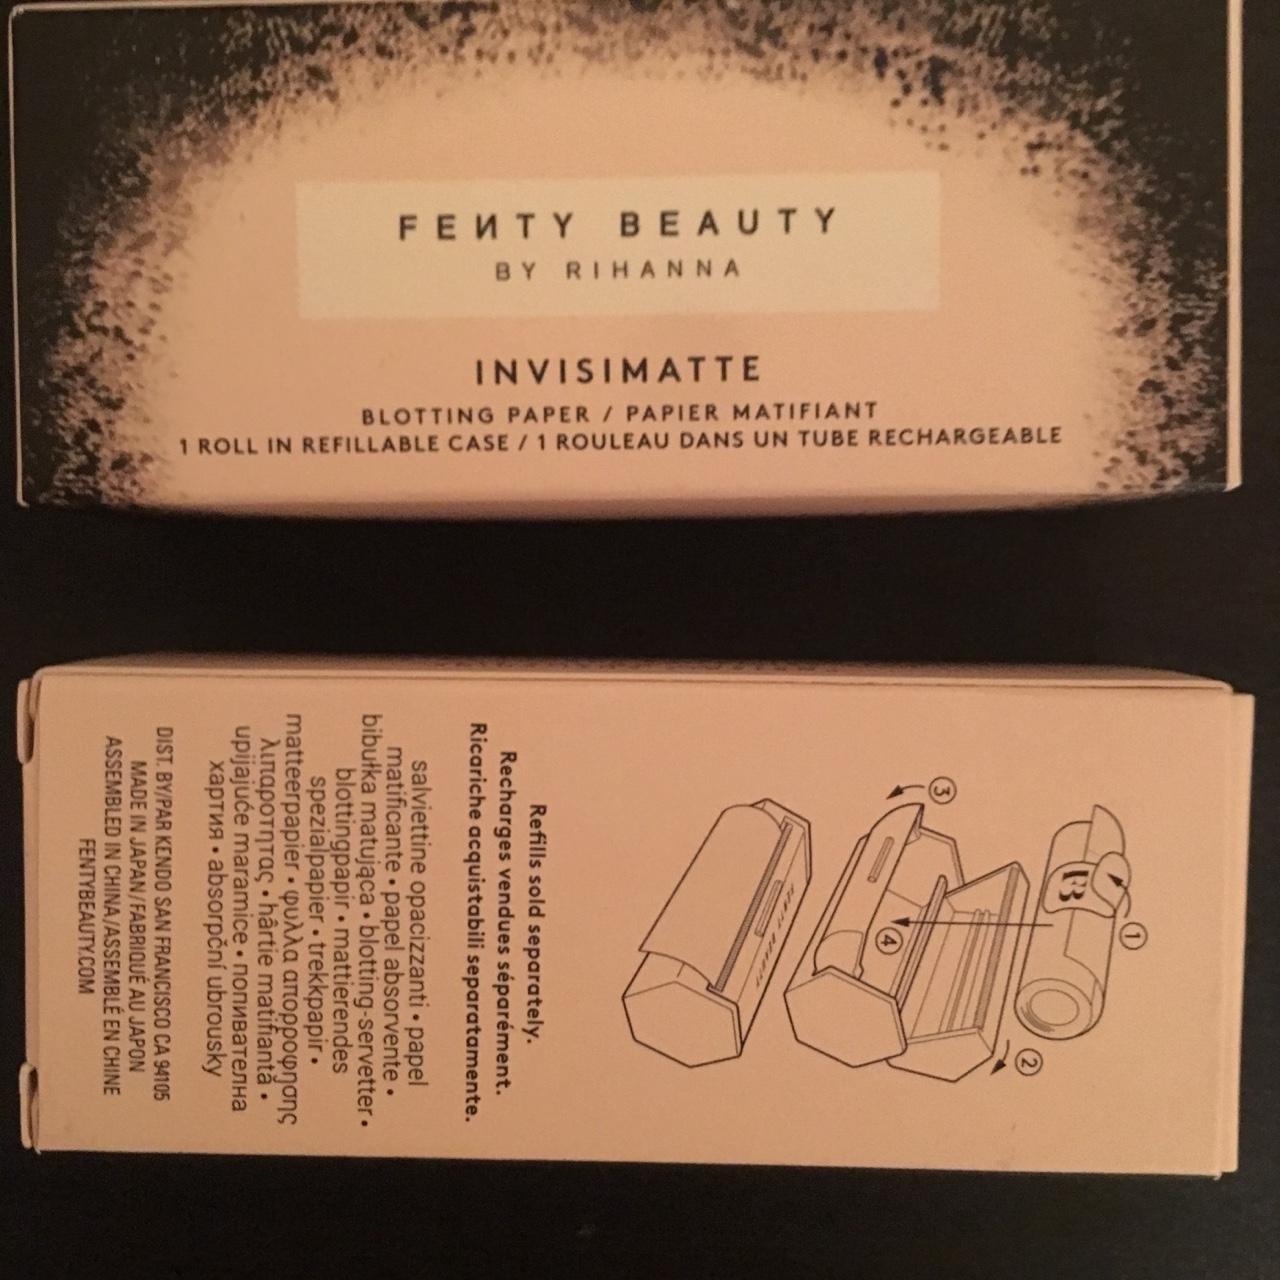 Fenty Beauty by Rihanna Invisimatte Blotting Paper Refill 1roll